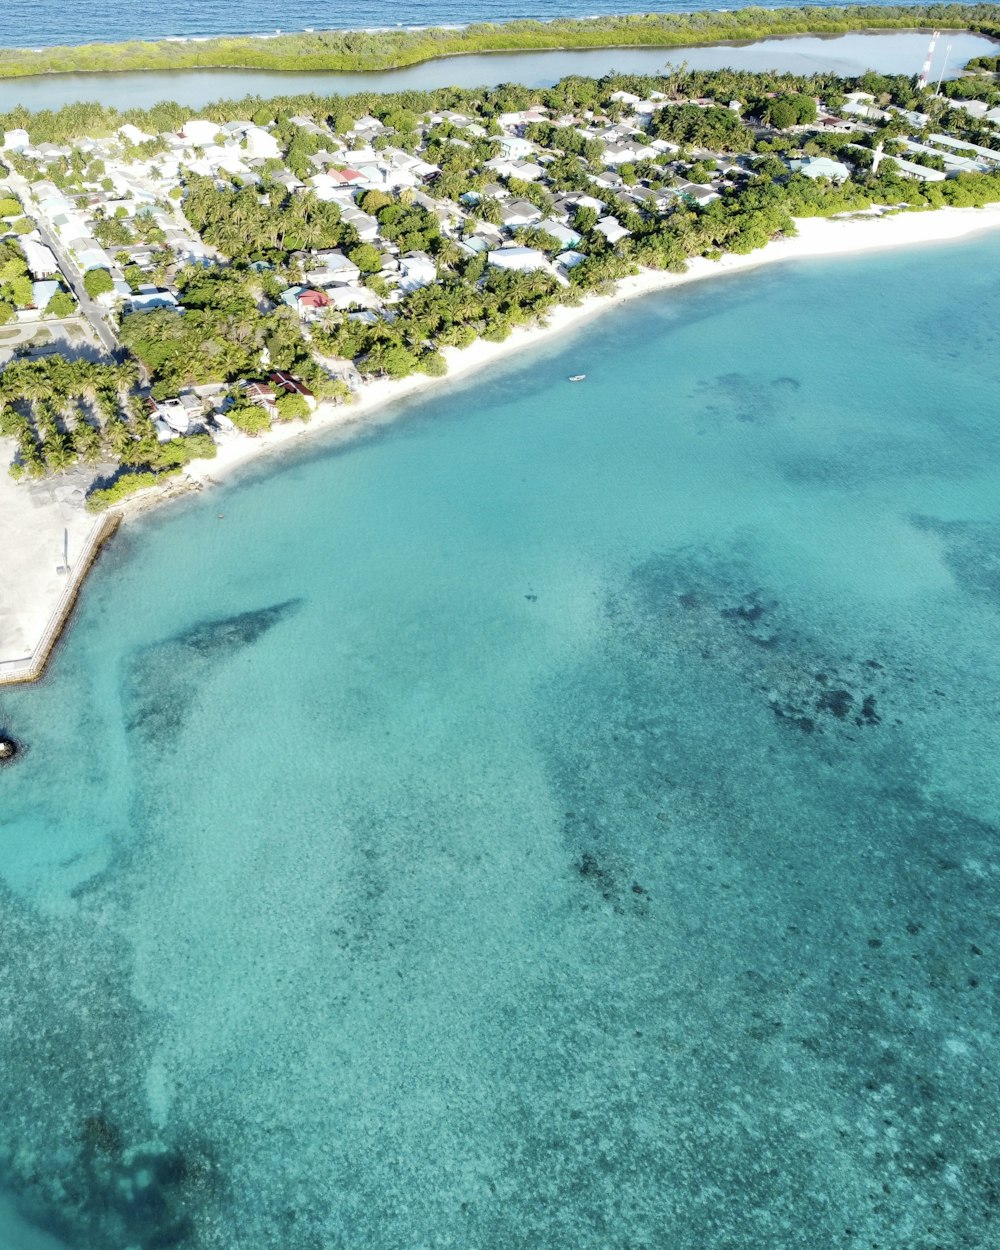 an aerial view of a tropical island with a white sand beach